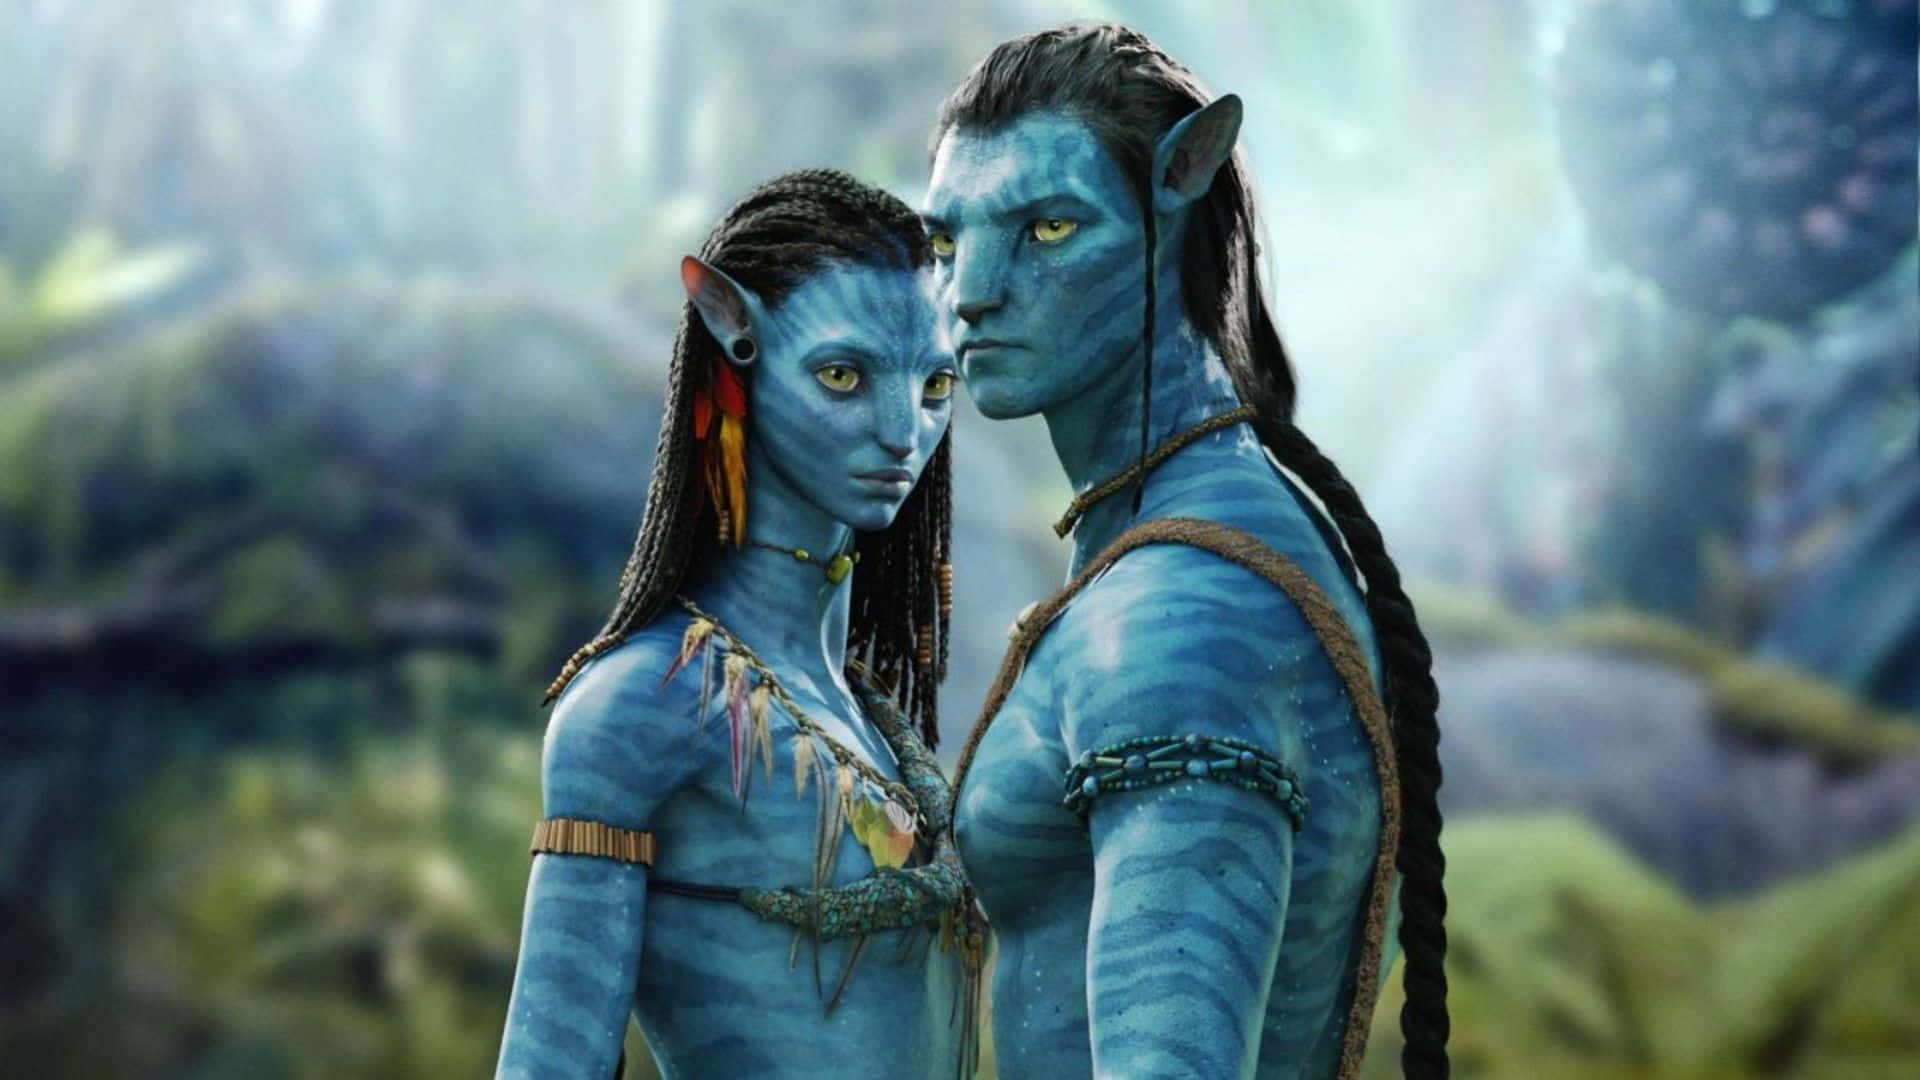 Download Avatar 2 The Way Of Water Neytari And Jake Wallpaper | Wallpapers .com